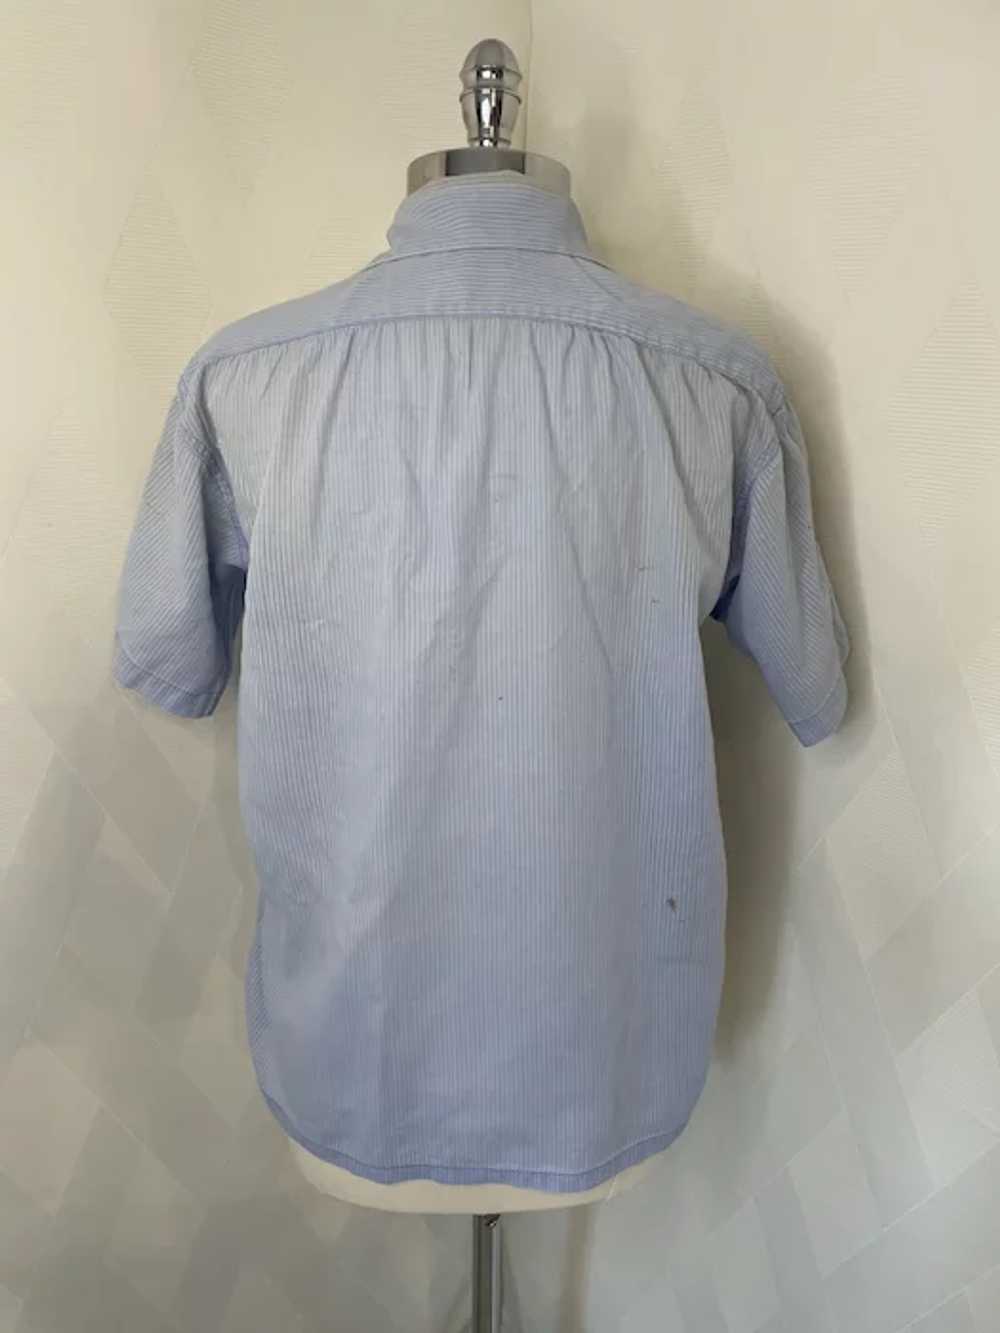 Vintage 1940s Airman Blue Pinstripe Uniform Shirt - image 2